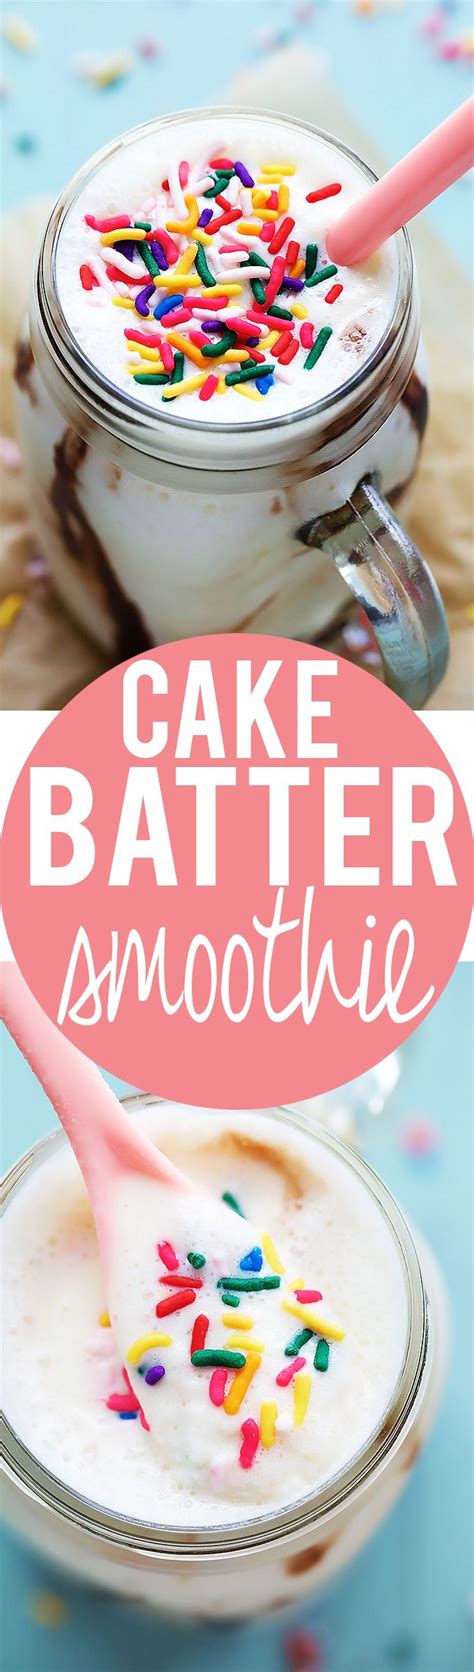 Cake Batter Smoothie Creme De La Crumb Cake Batter Smoothie Snack